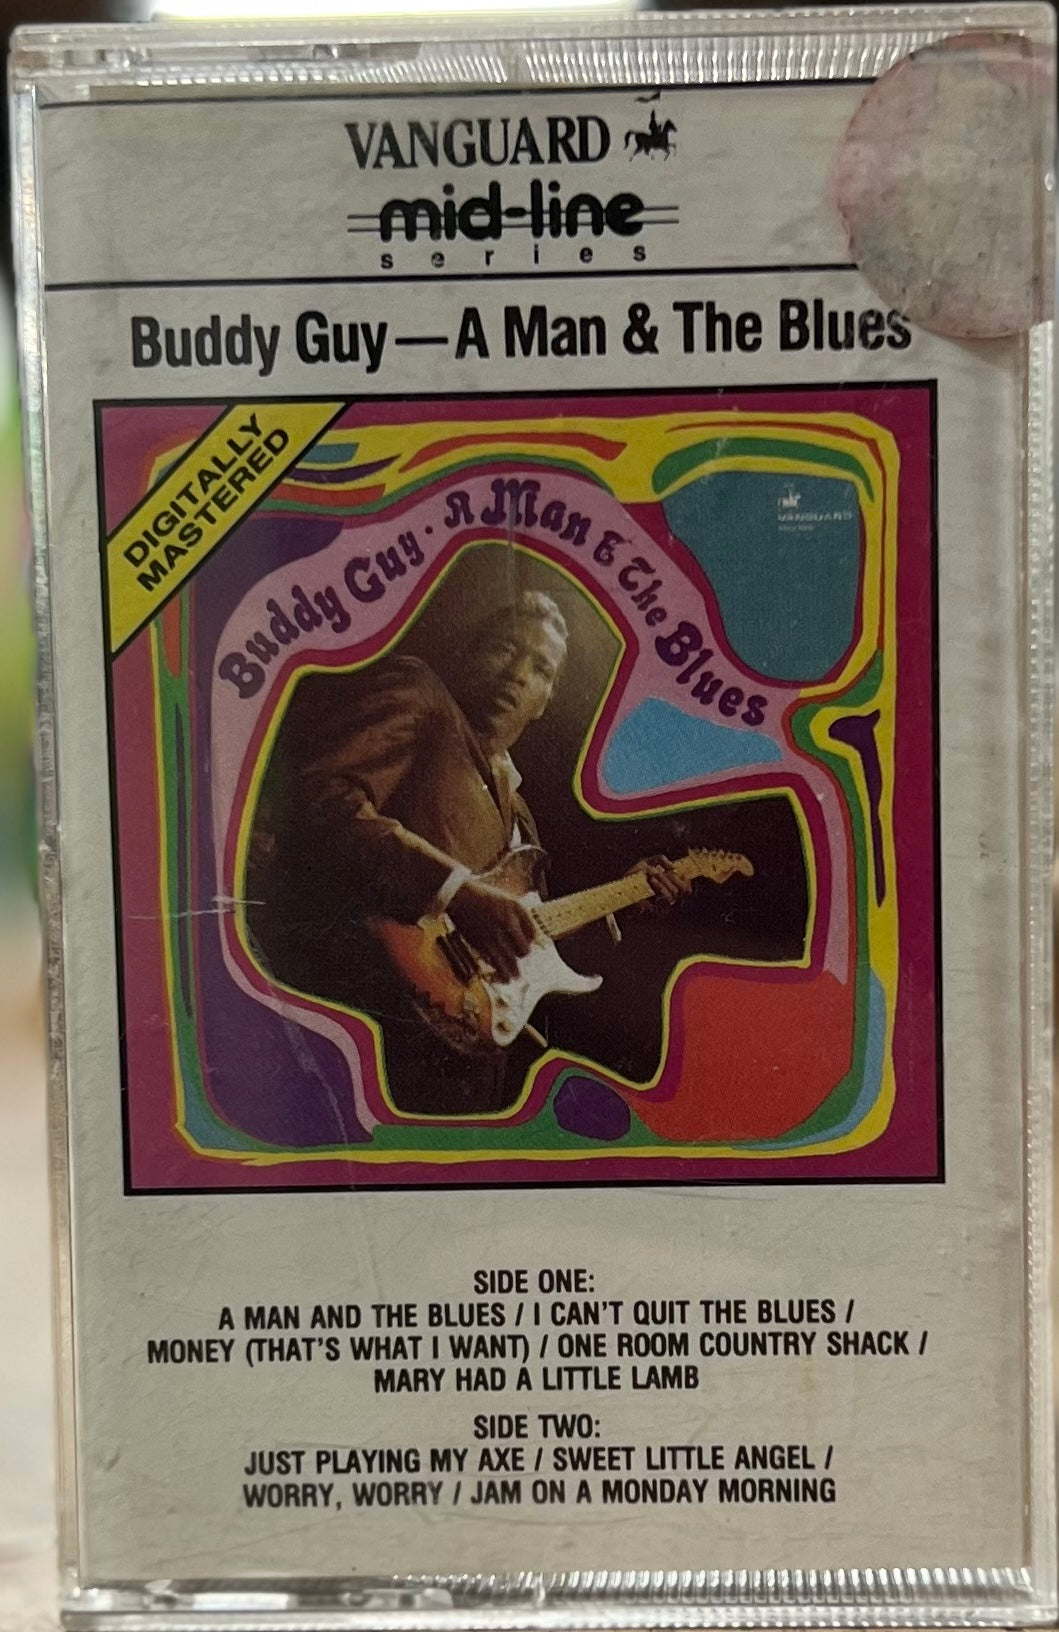 Buddy Guy- A Man & The Blues